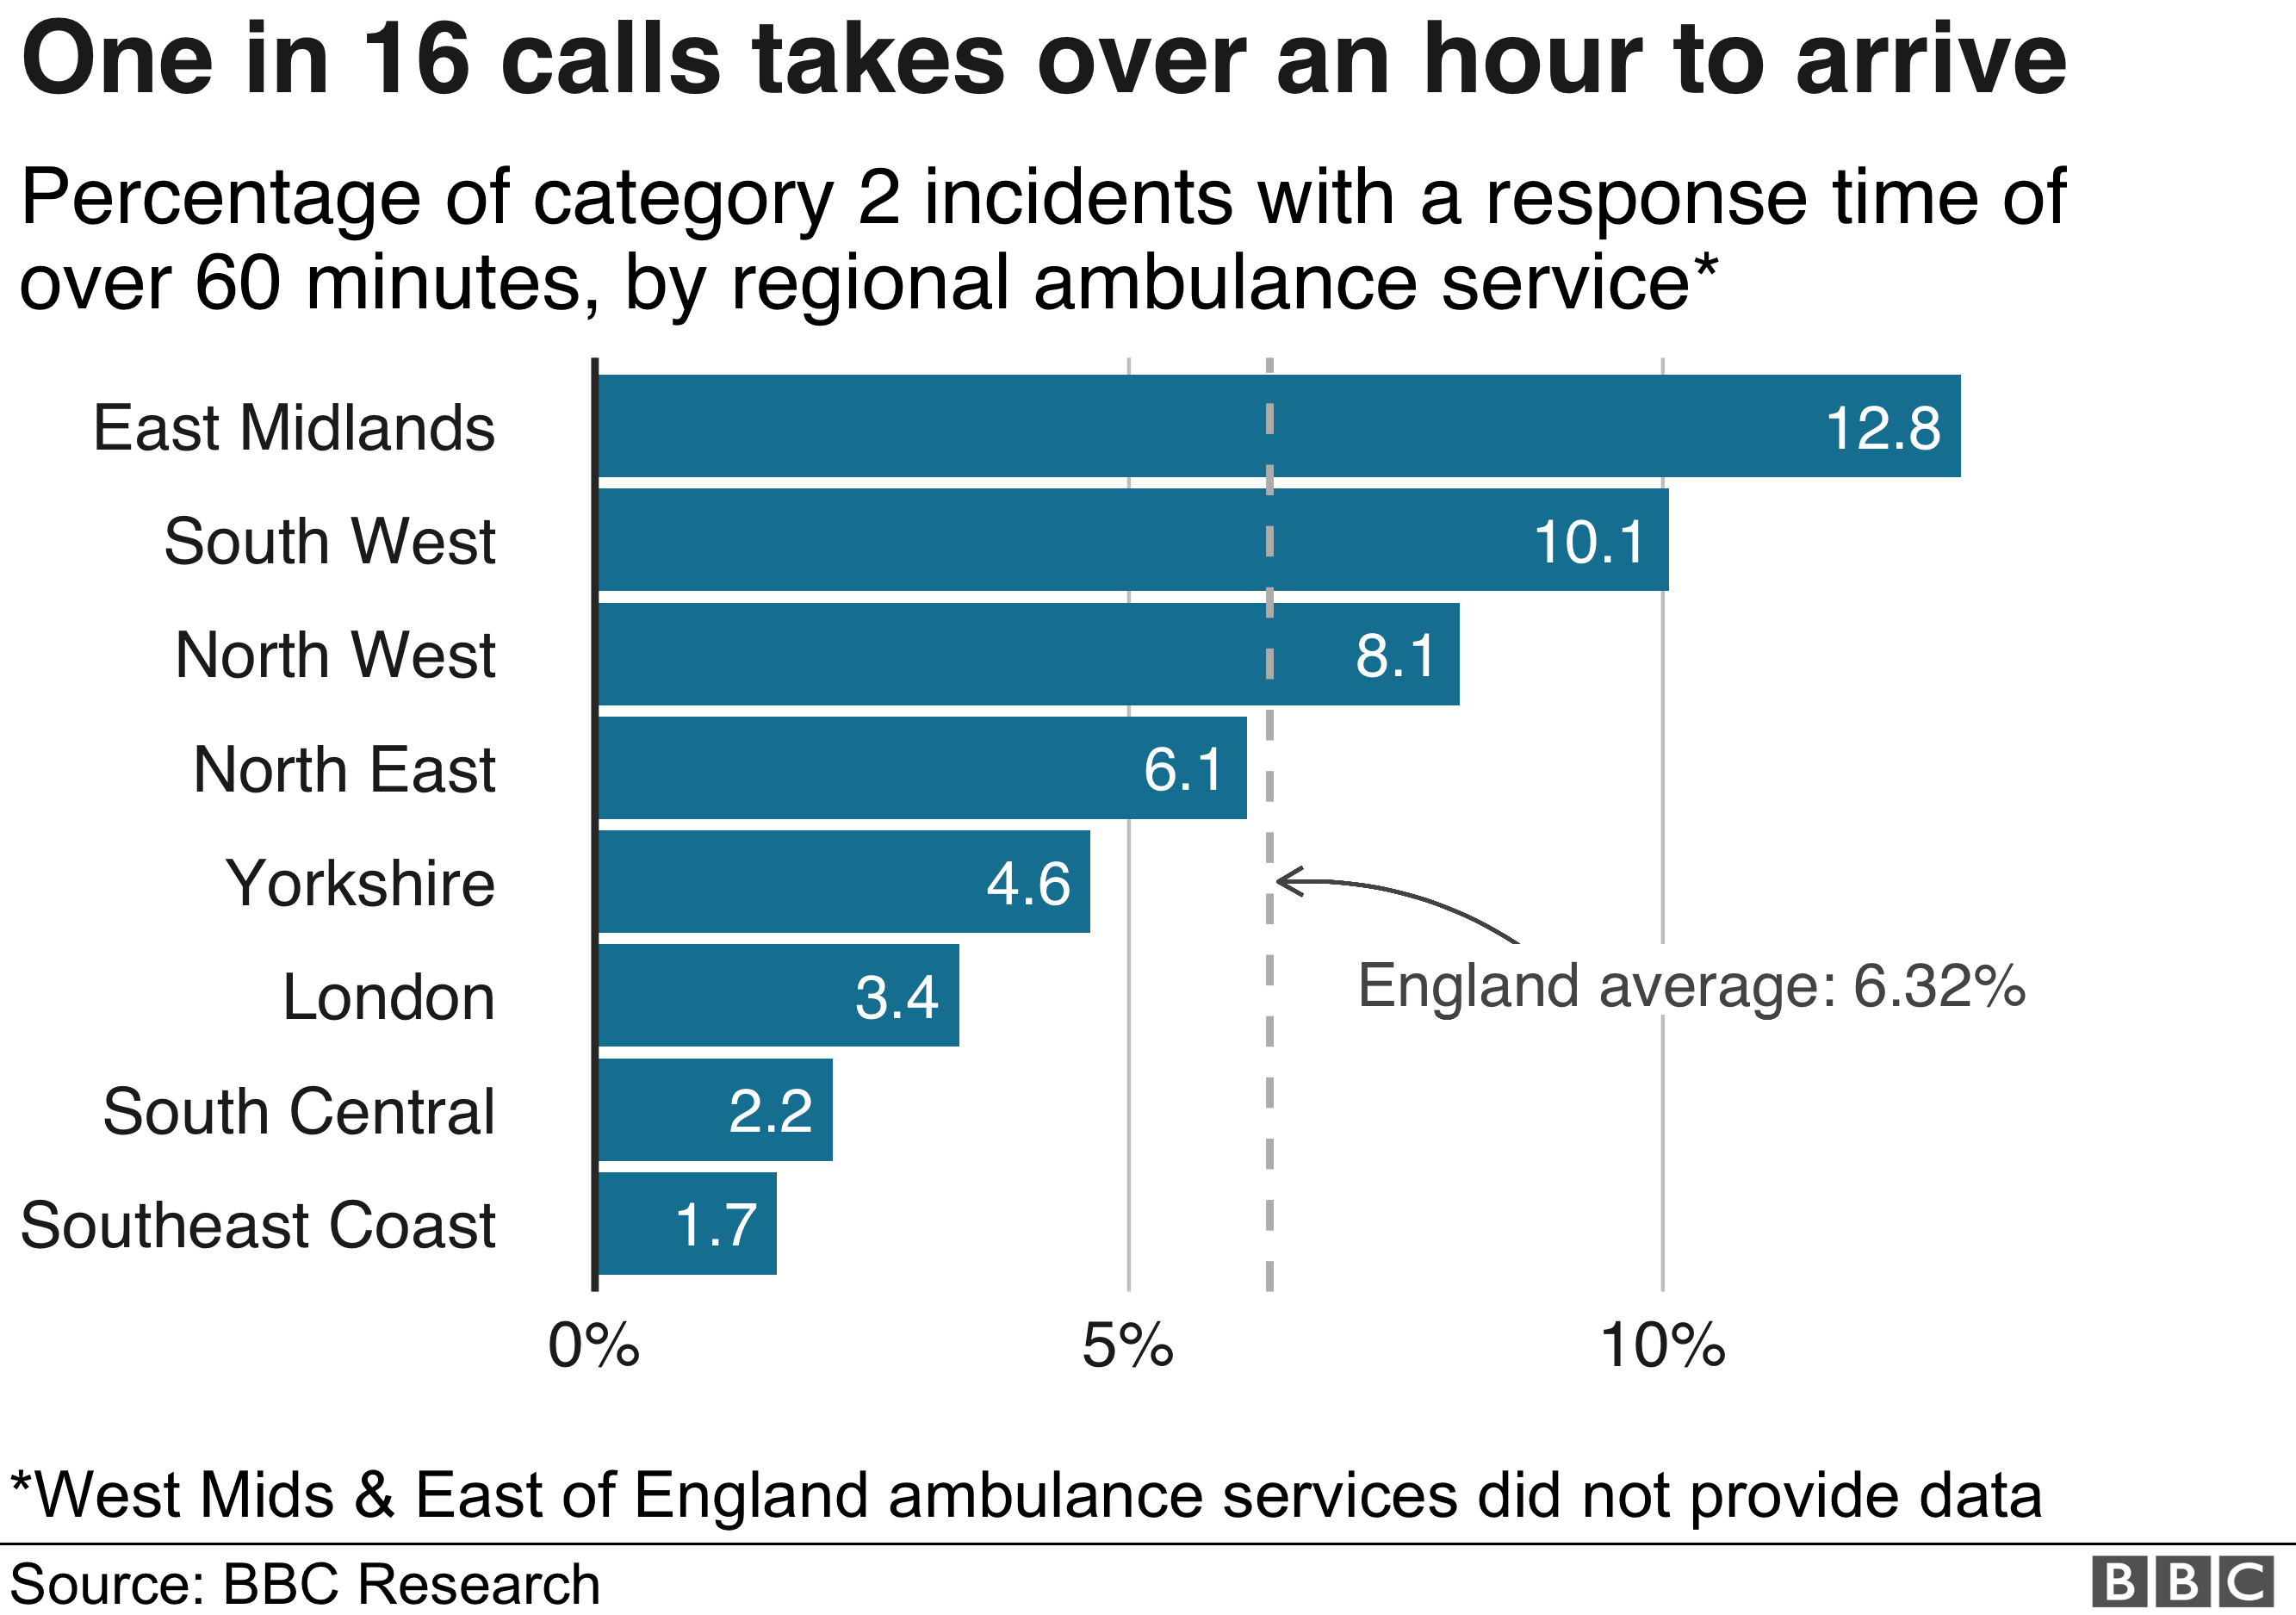 Chart showing regional ambulance performance